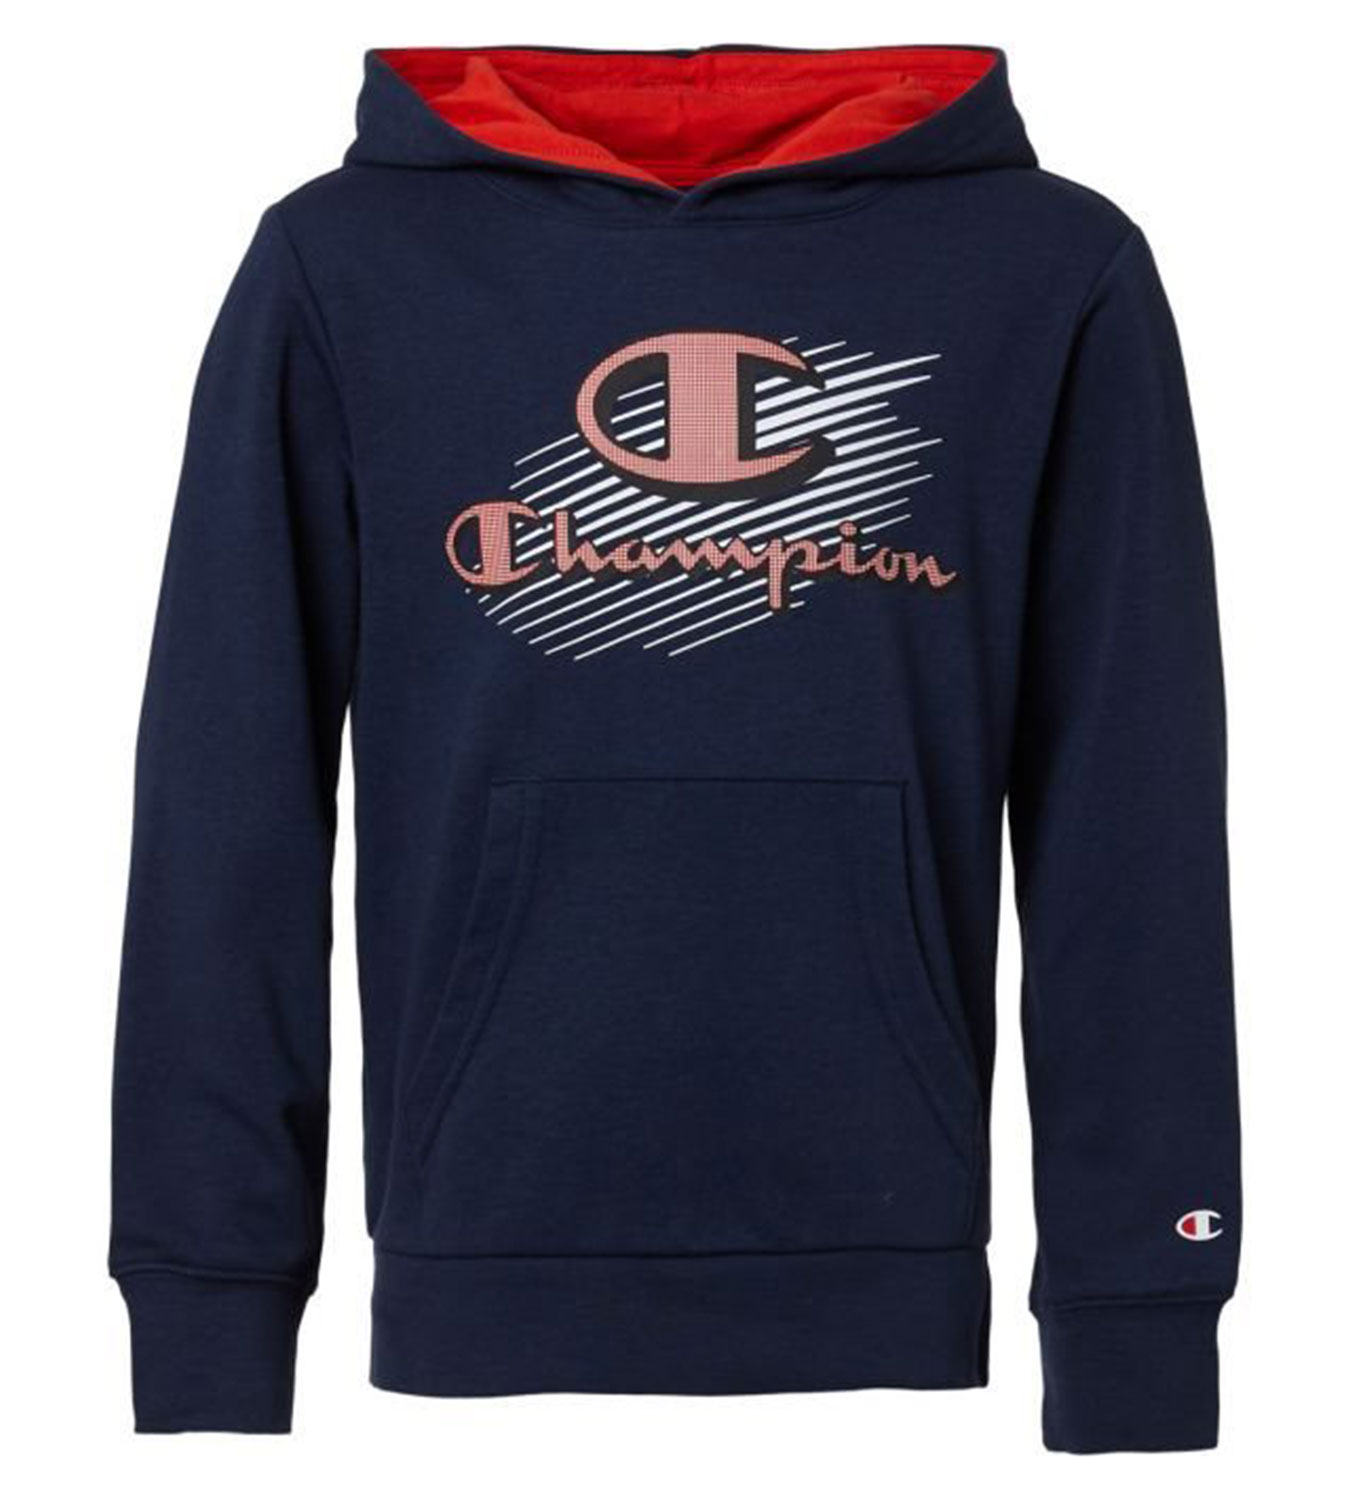 Худи Champion Legacy Graphic Shop Hooded Sweatshirt 305206-BS503 синий р.S поезд brio special edition синий с серебром 33642